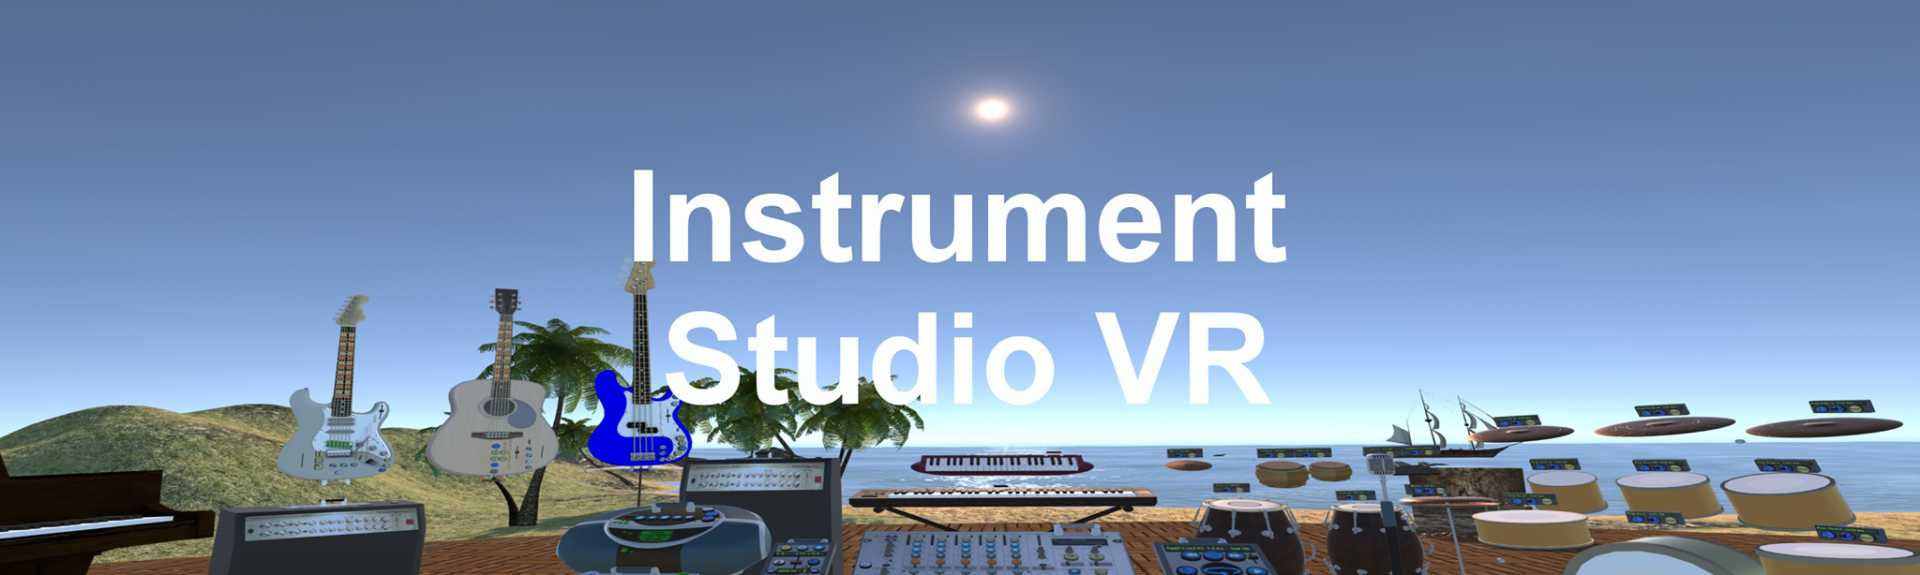 Instrument Studio VR